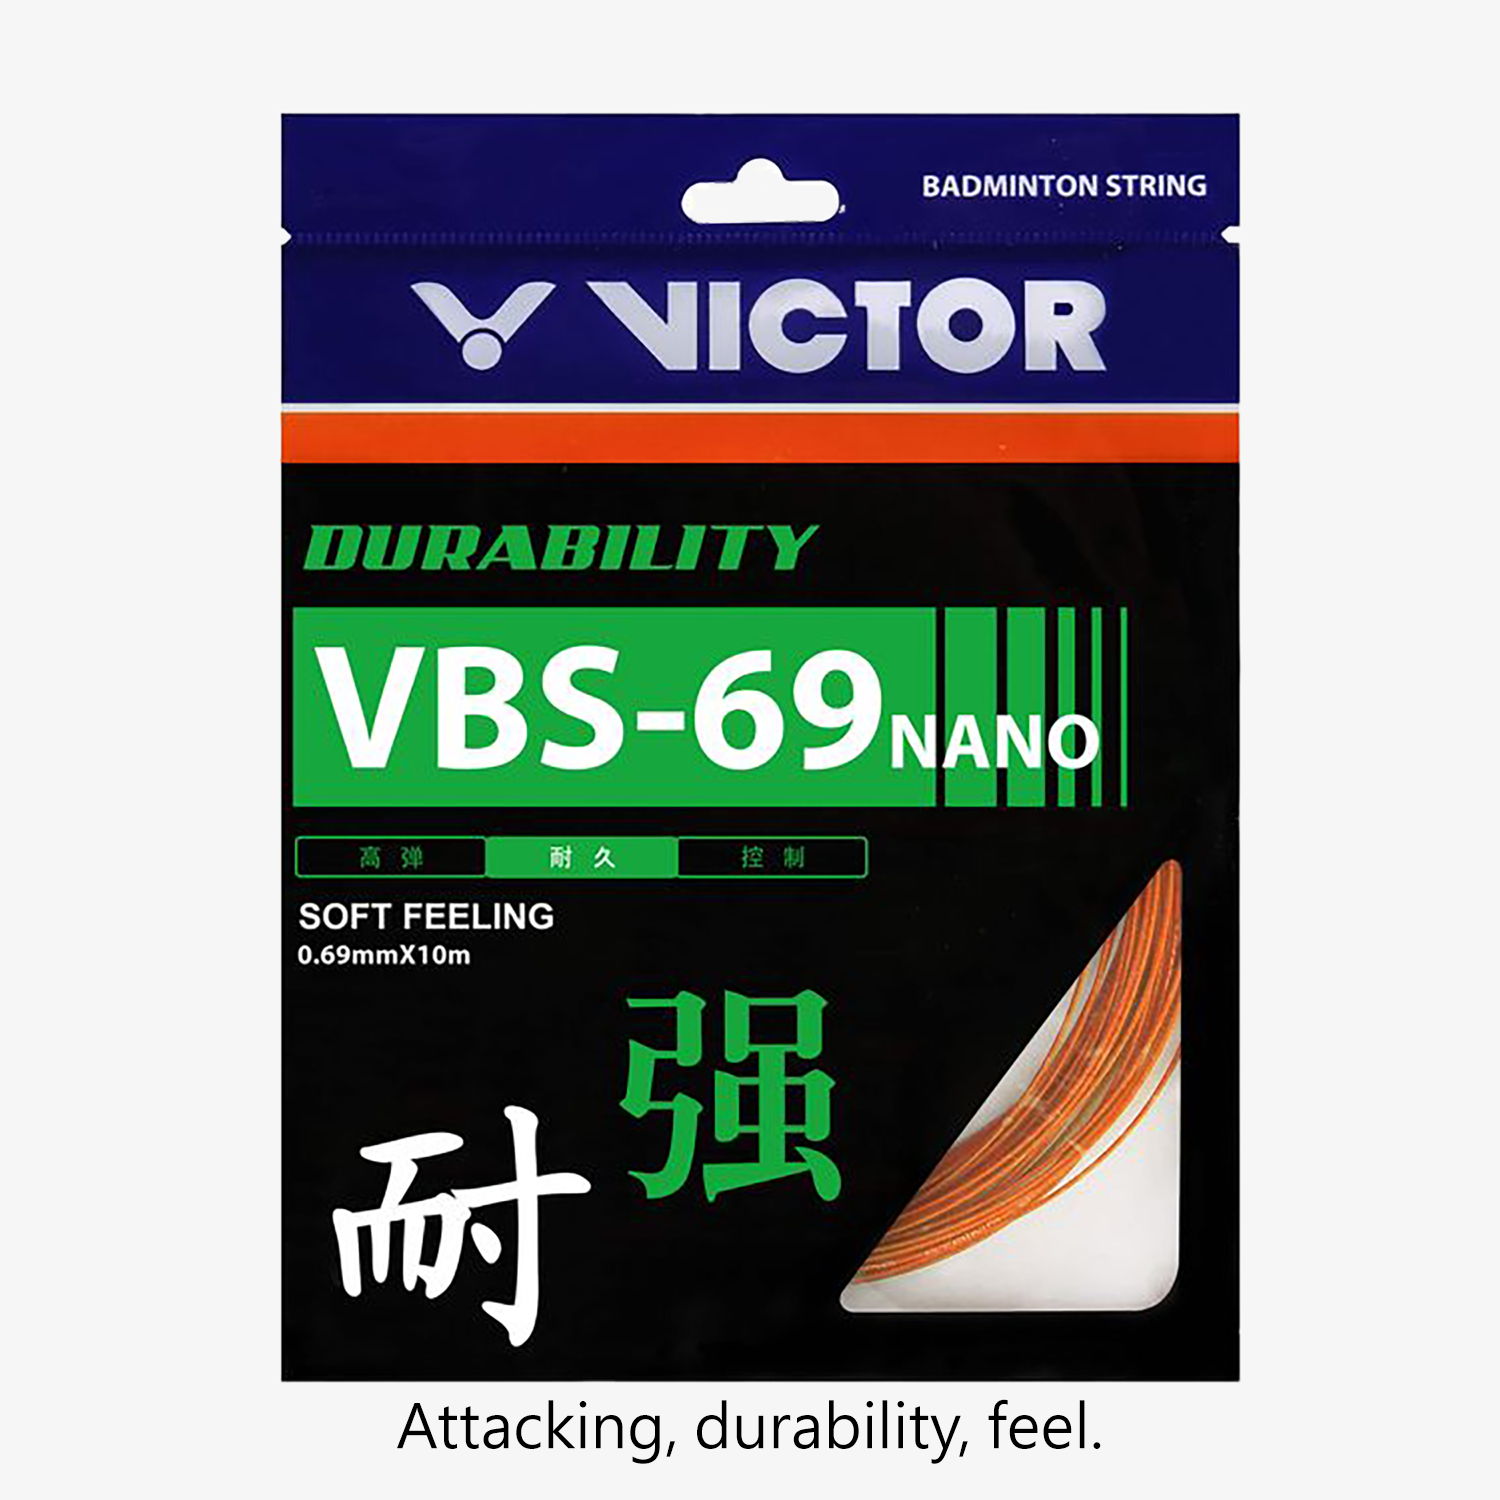 Victor VBS-69N Nano Badminton String 